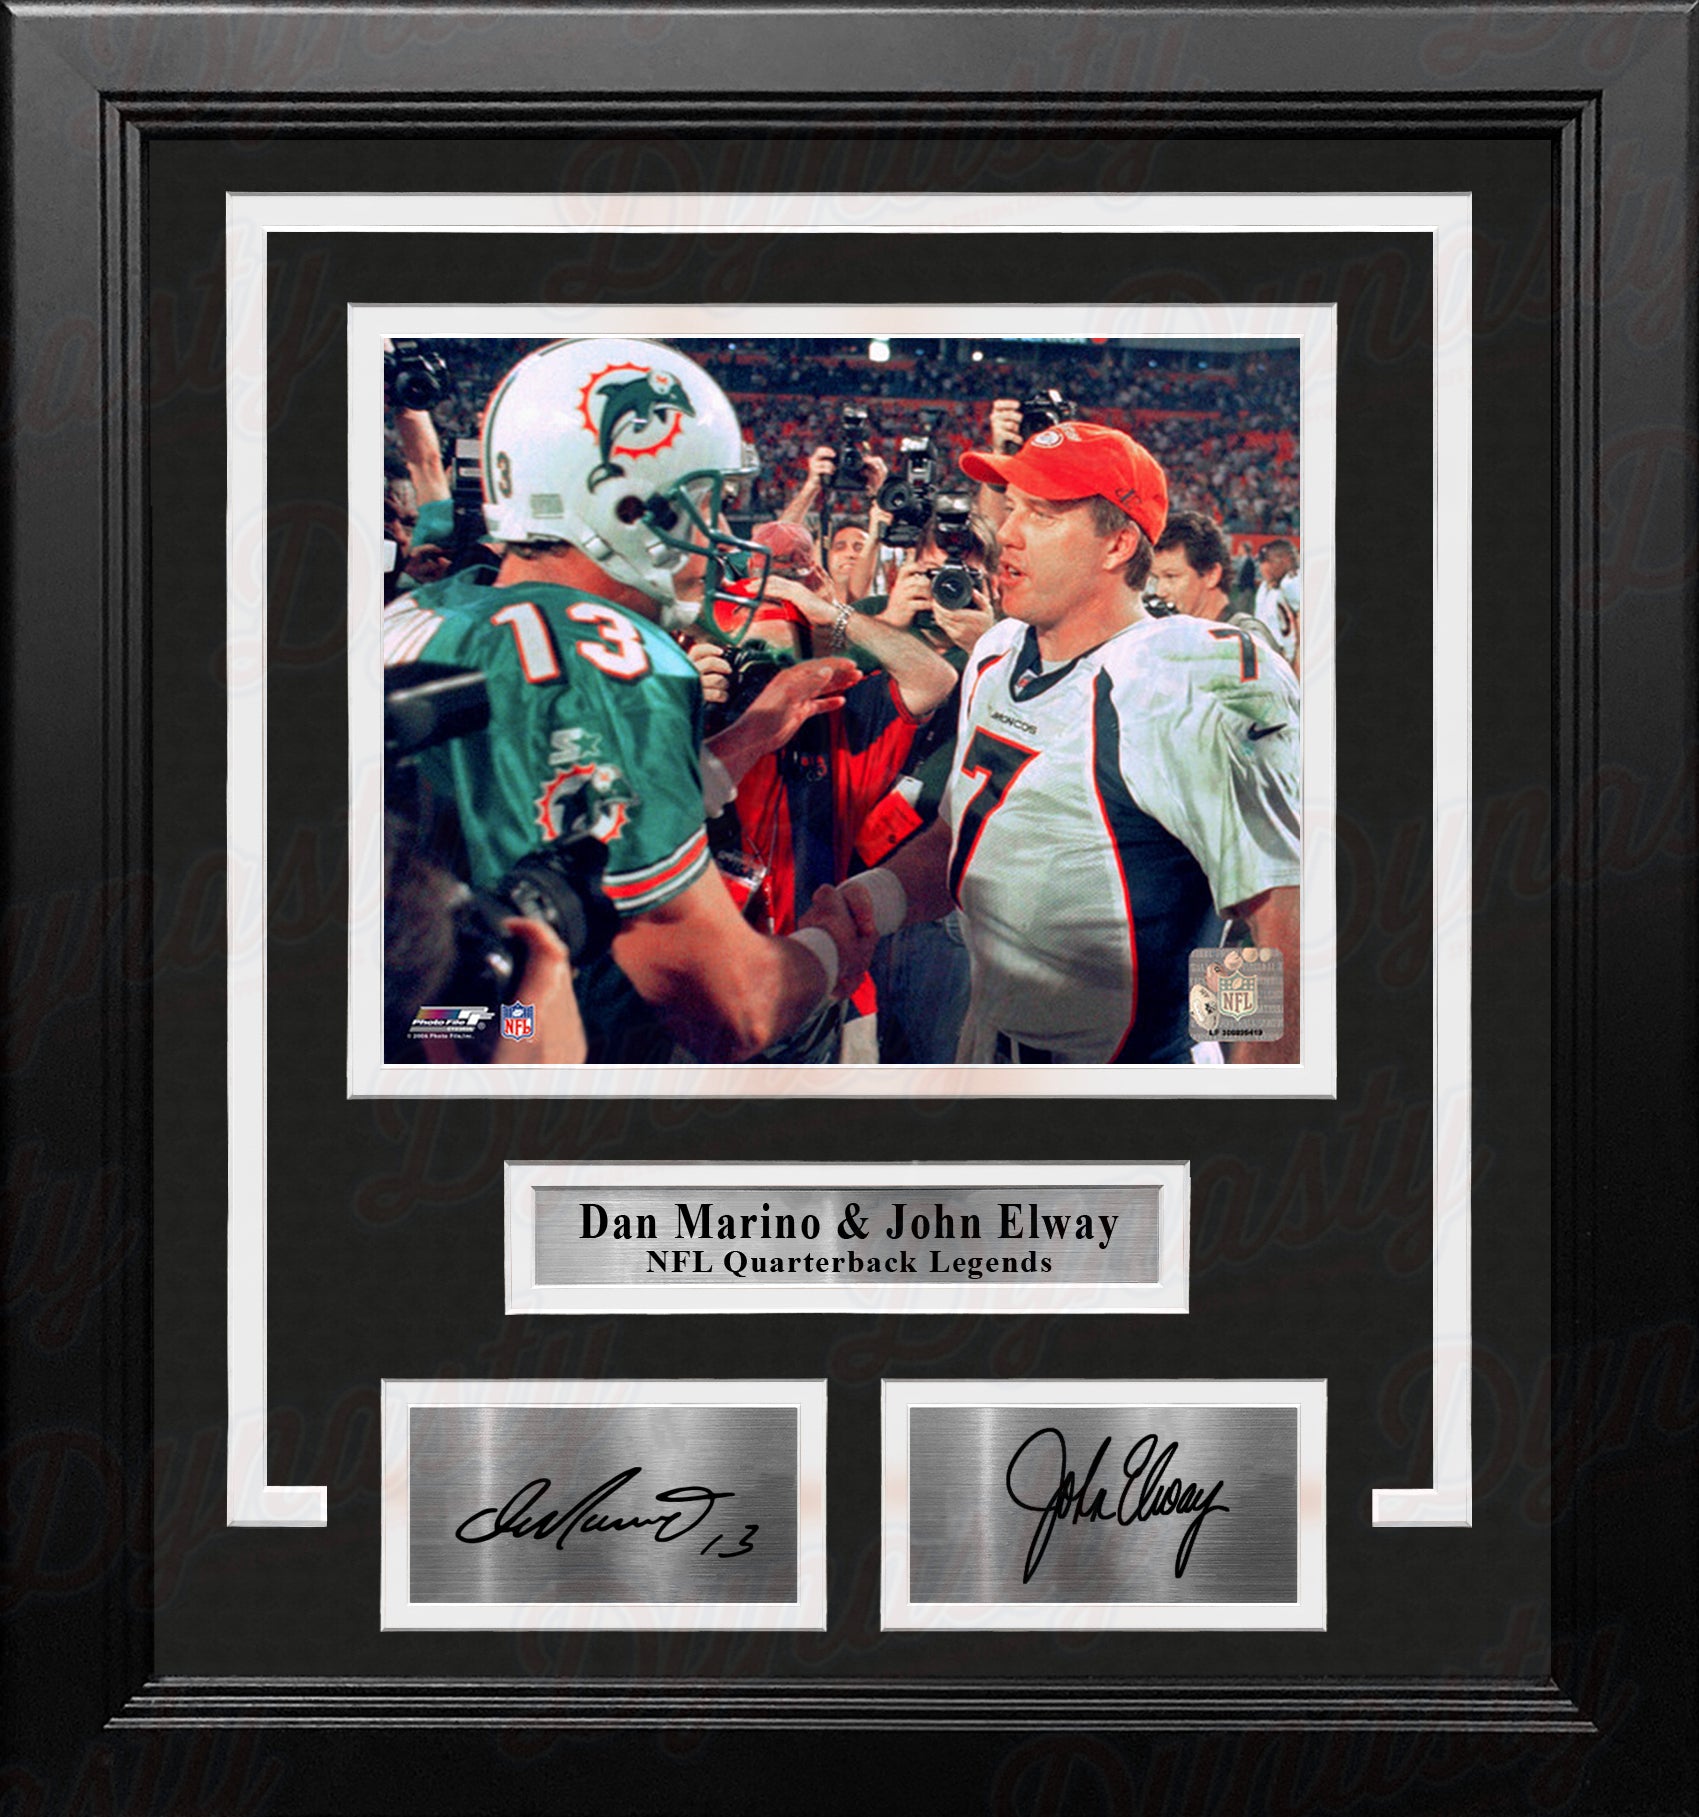 Dan Marino & John Elway 8x10 Framed Quarterback Legends Football Photo with Engraved Autographs - Dynasty Sports & Framing 